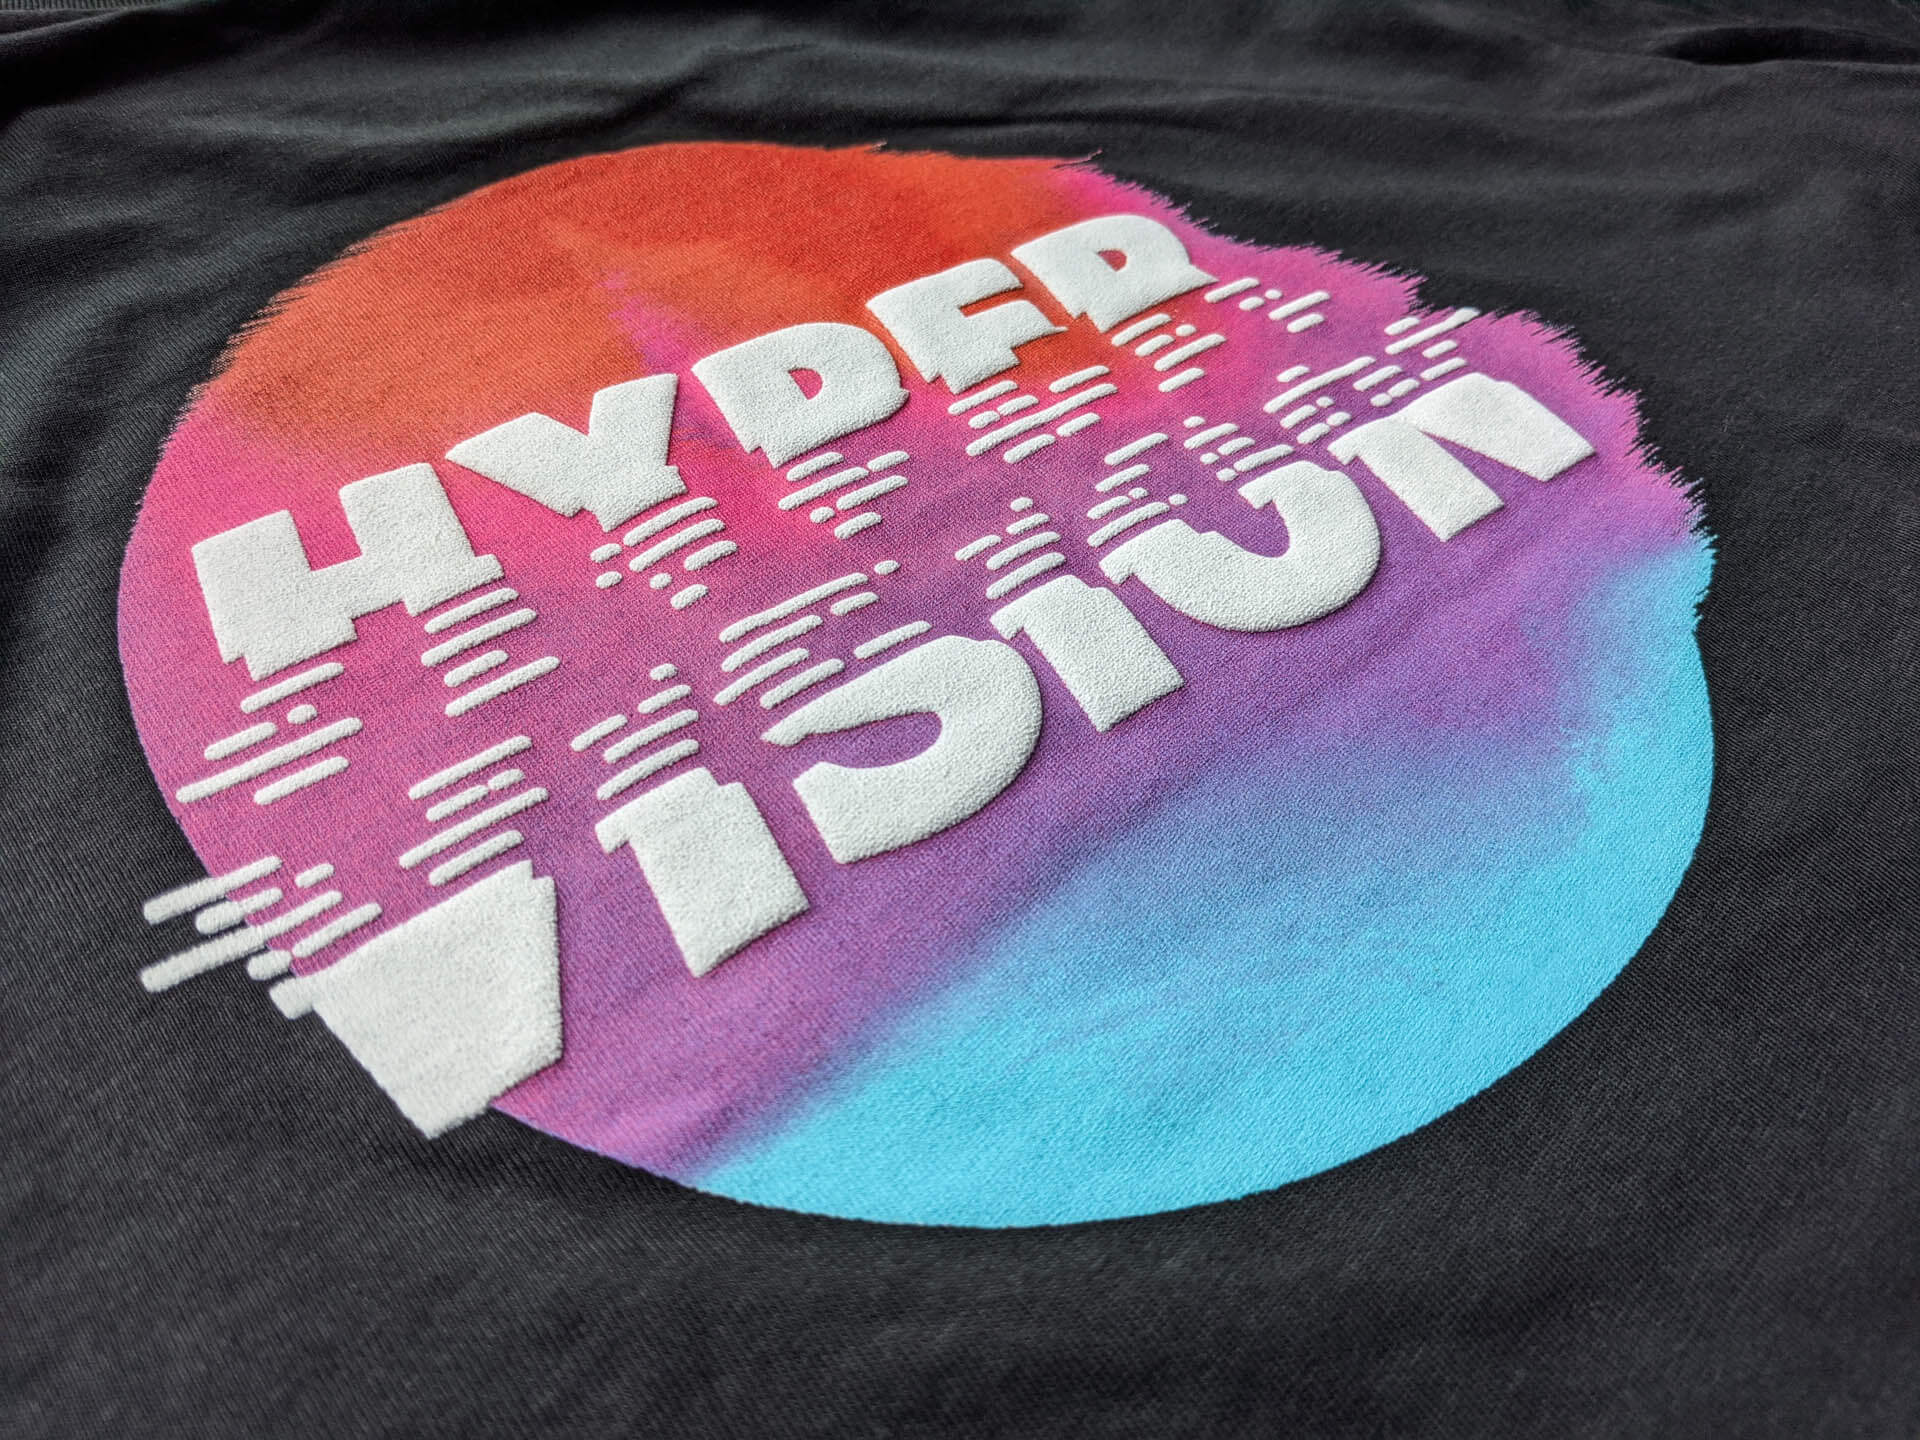 UKF Hyper Vision Unisex-T-Shirt